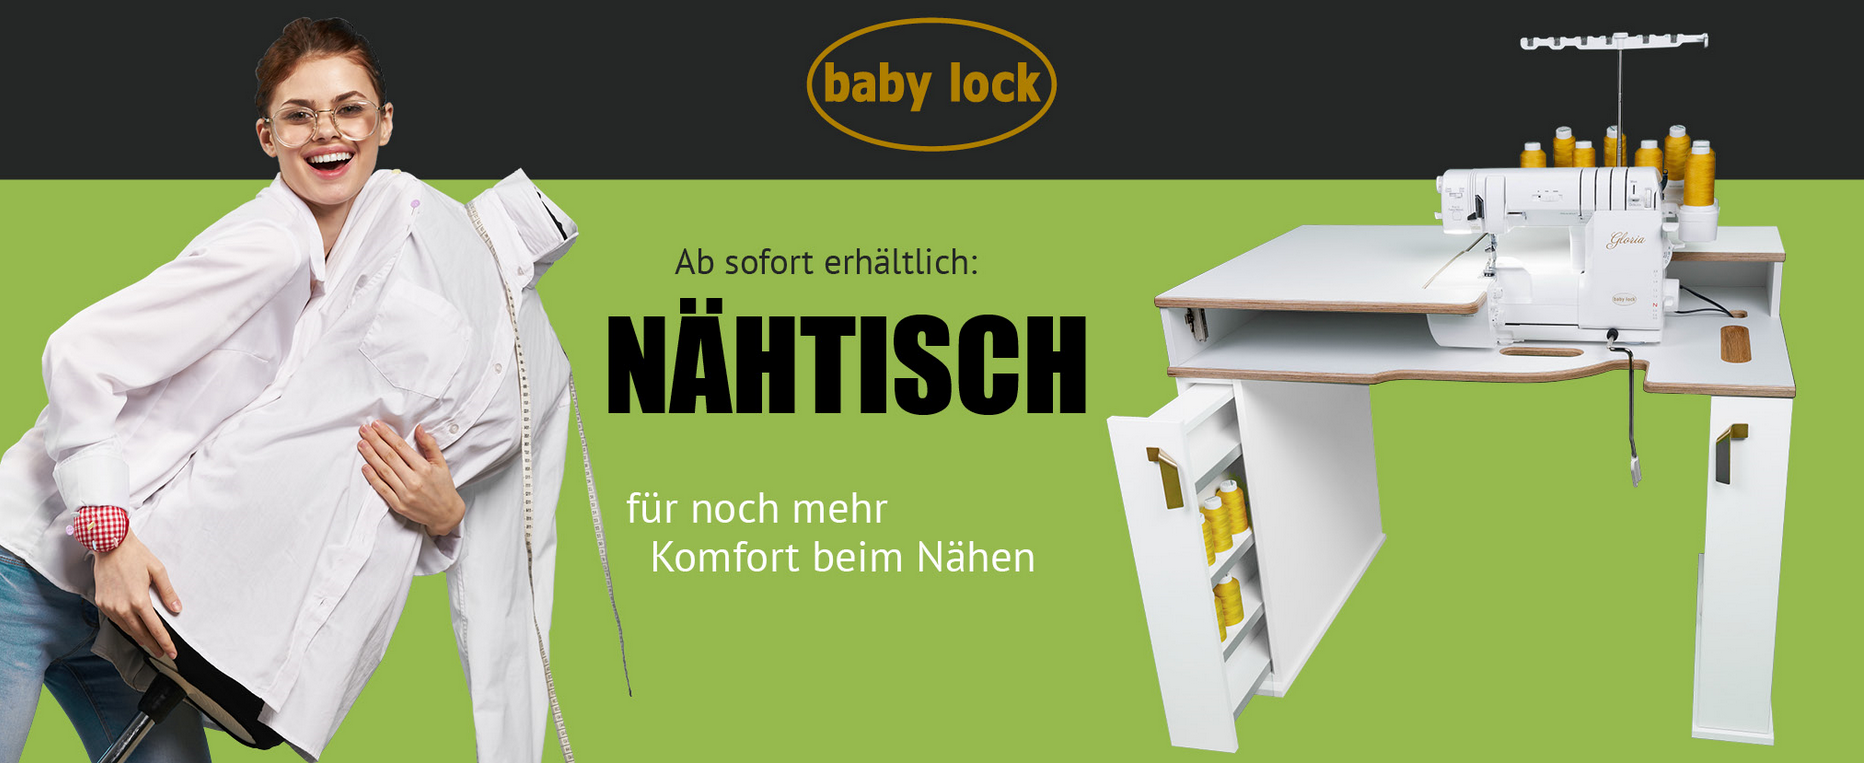 Baby-lock-Nahtisch-Grafik